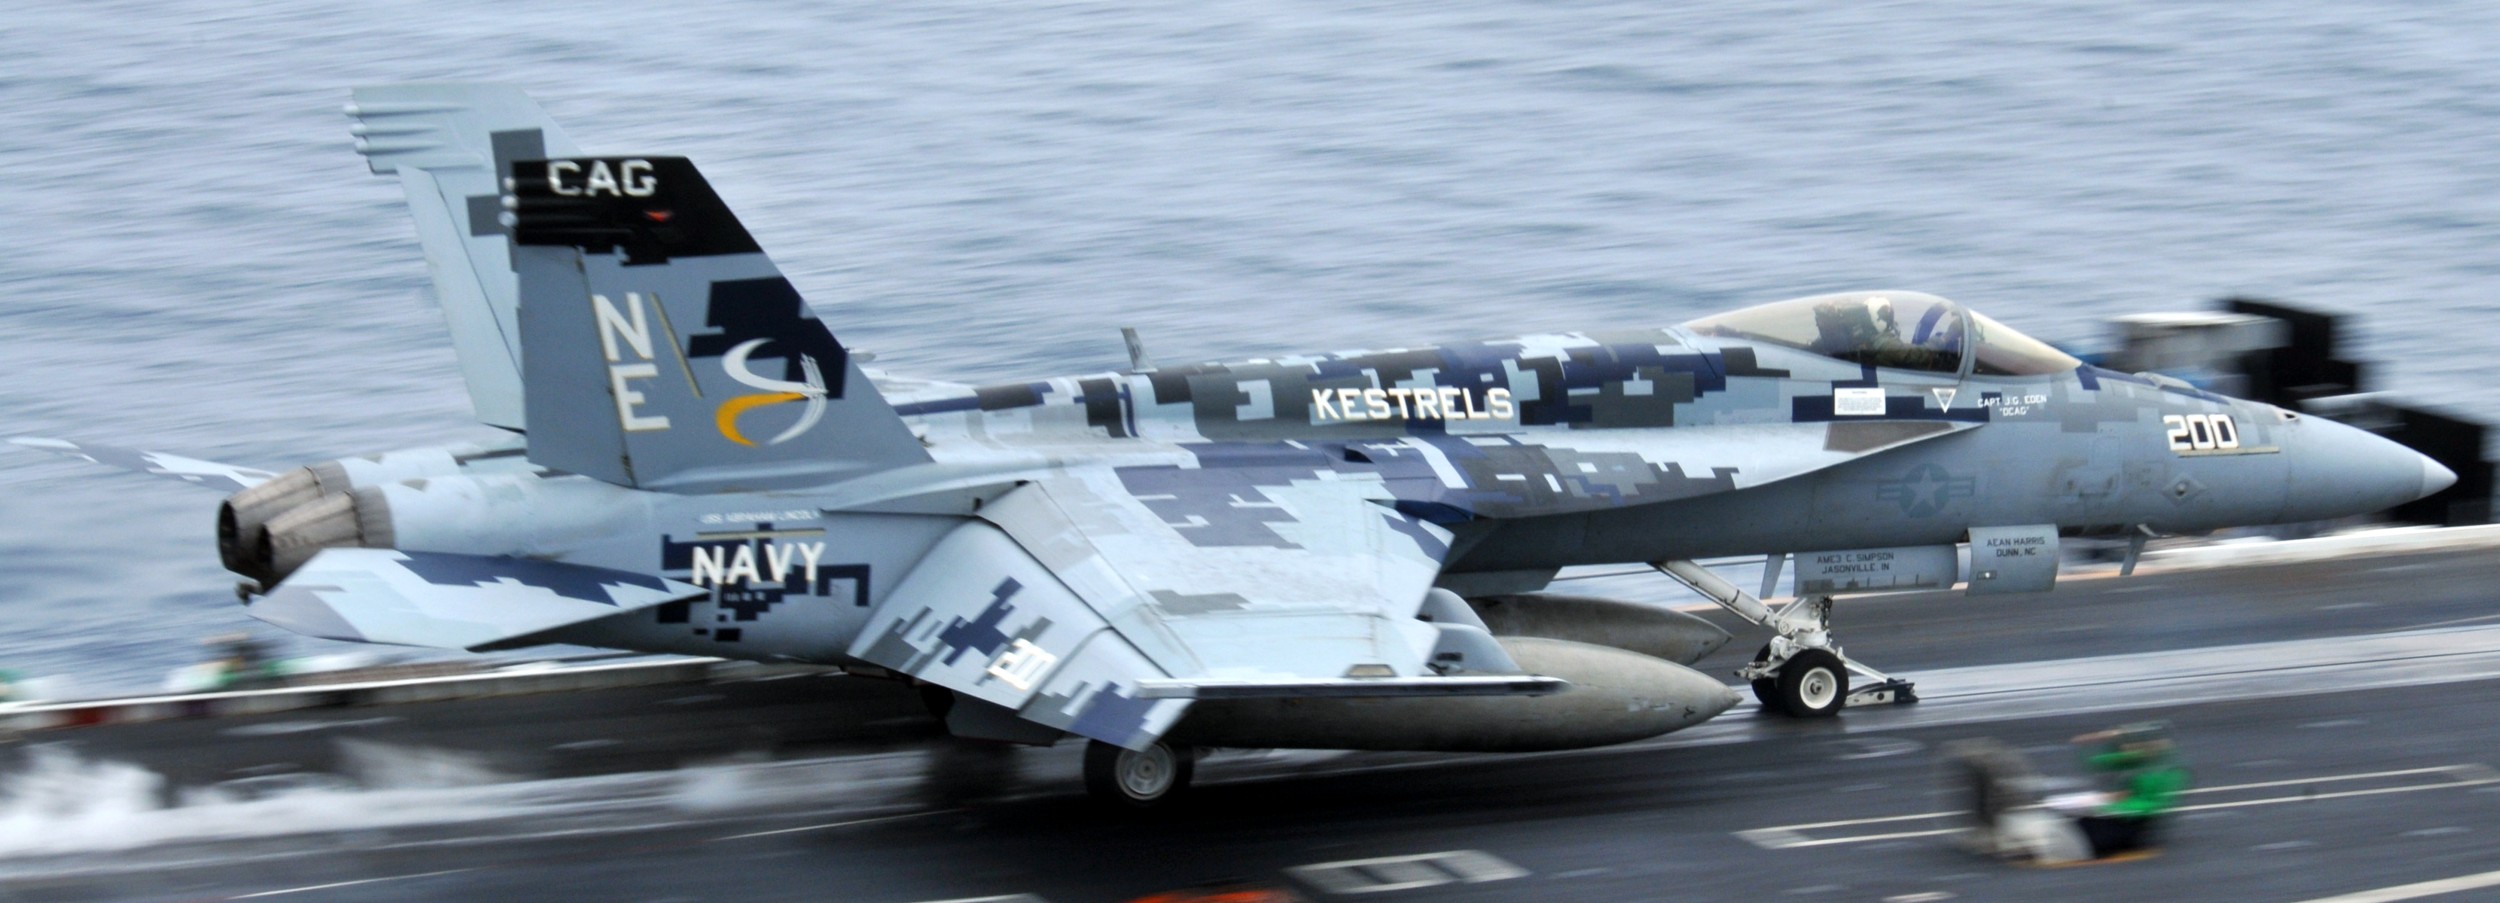 vfa-137 kestrels strike fighter squadron f/a-18e super hornet cvw-2 uss abraham lincoln cvn-72 2010 47